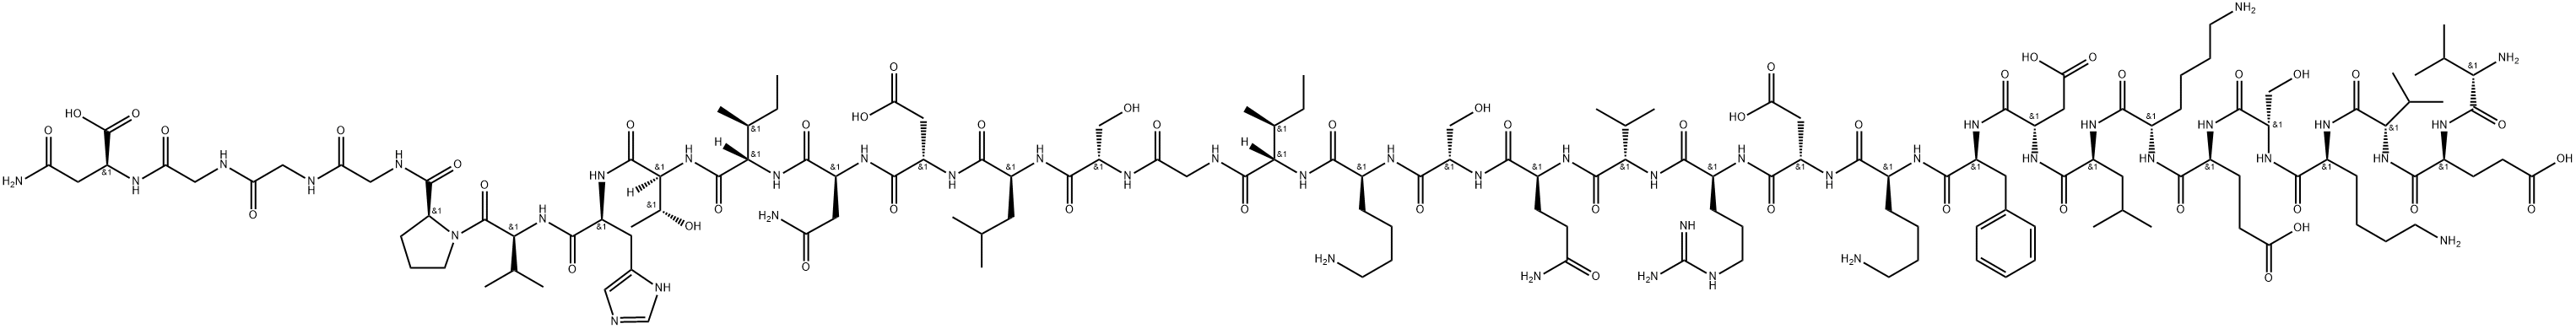 Tau Peptide (337-368) (Repeat 4 Domain) Structure